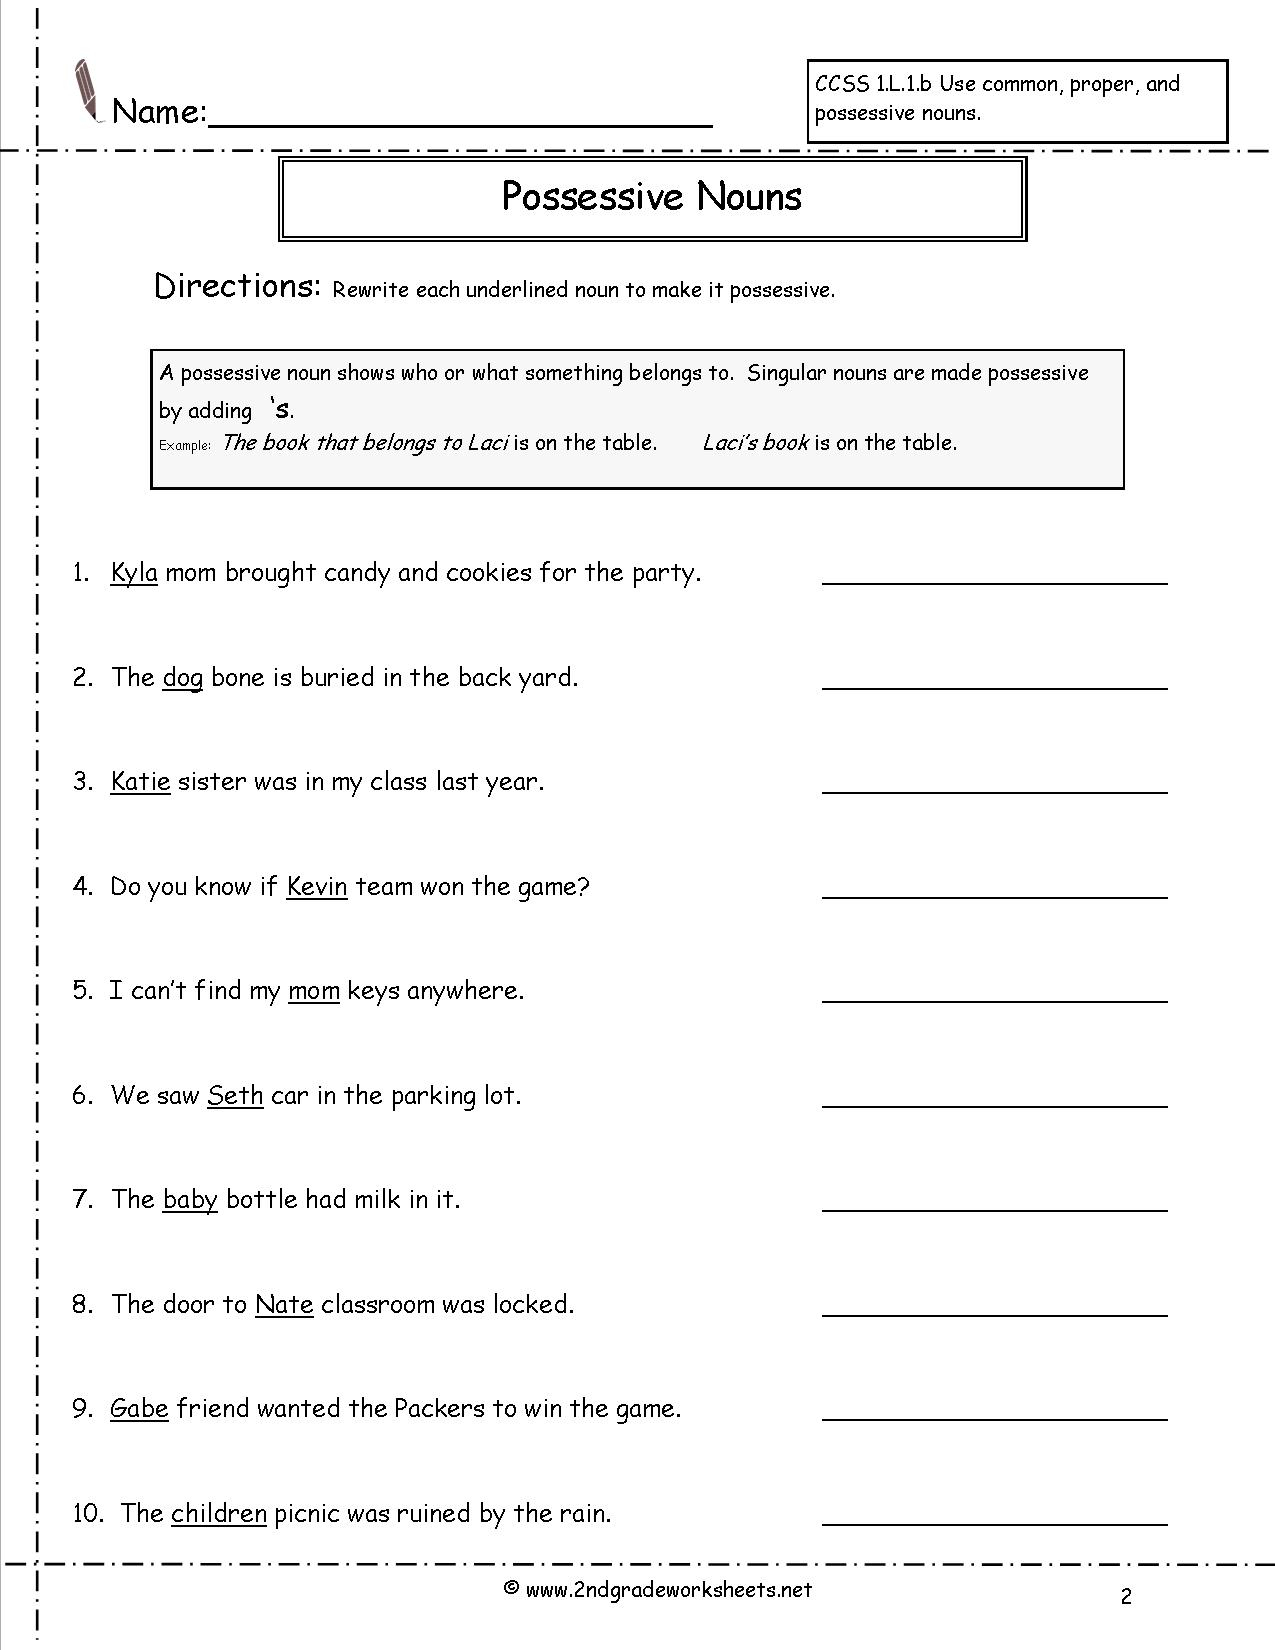 Second Grade Possessive Nouns Worksheets | Possessive Pronouns Printable Worksheets